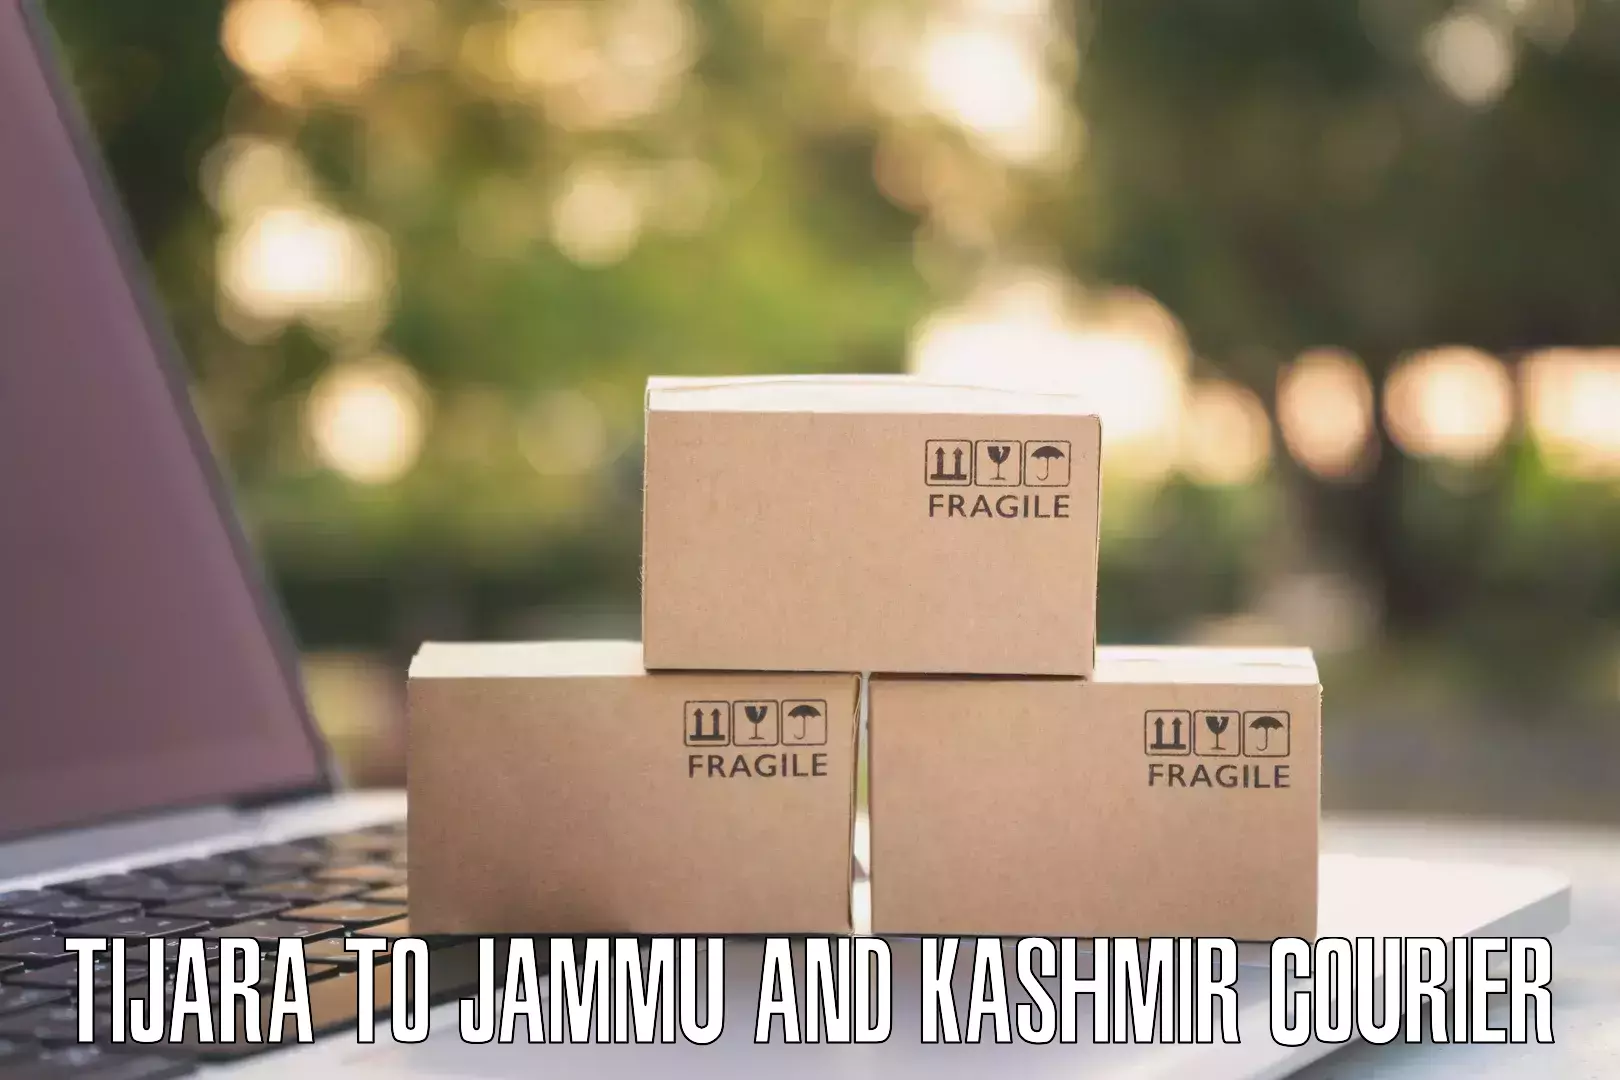 Courier service comparison Tijara to Jammu